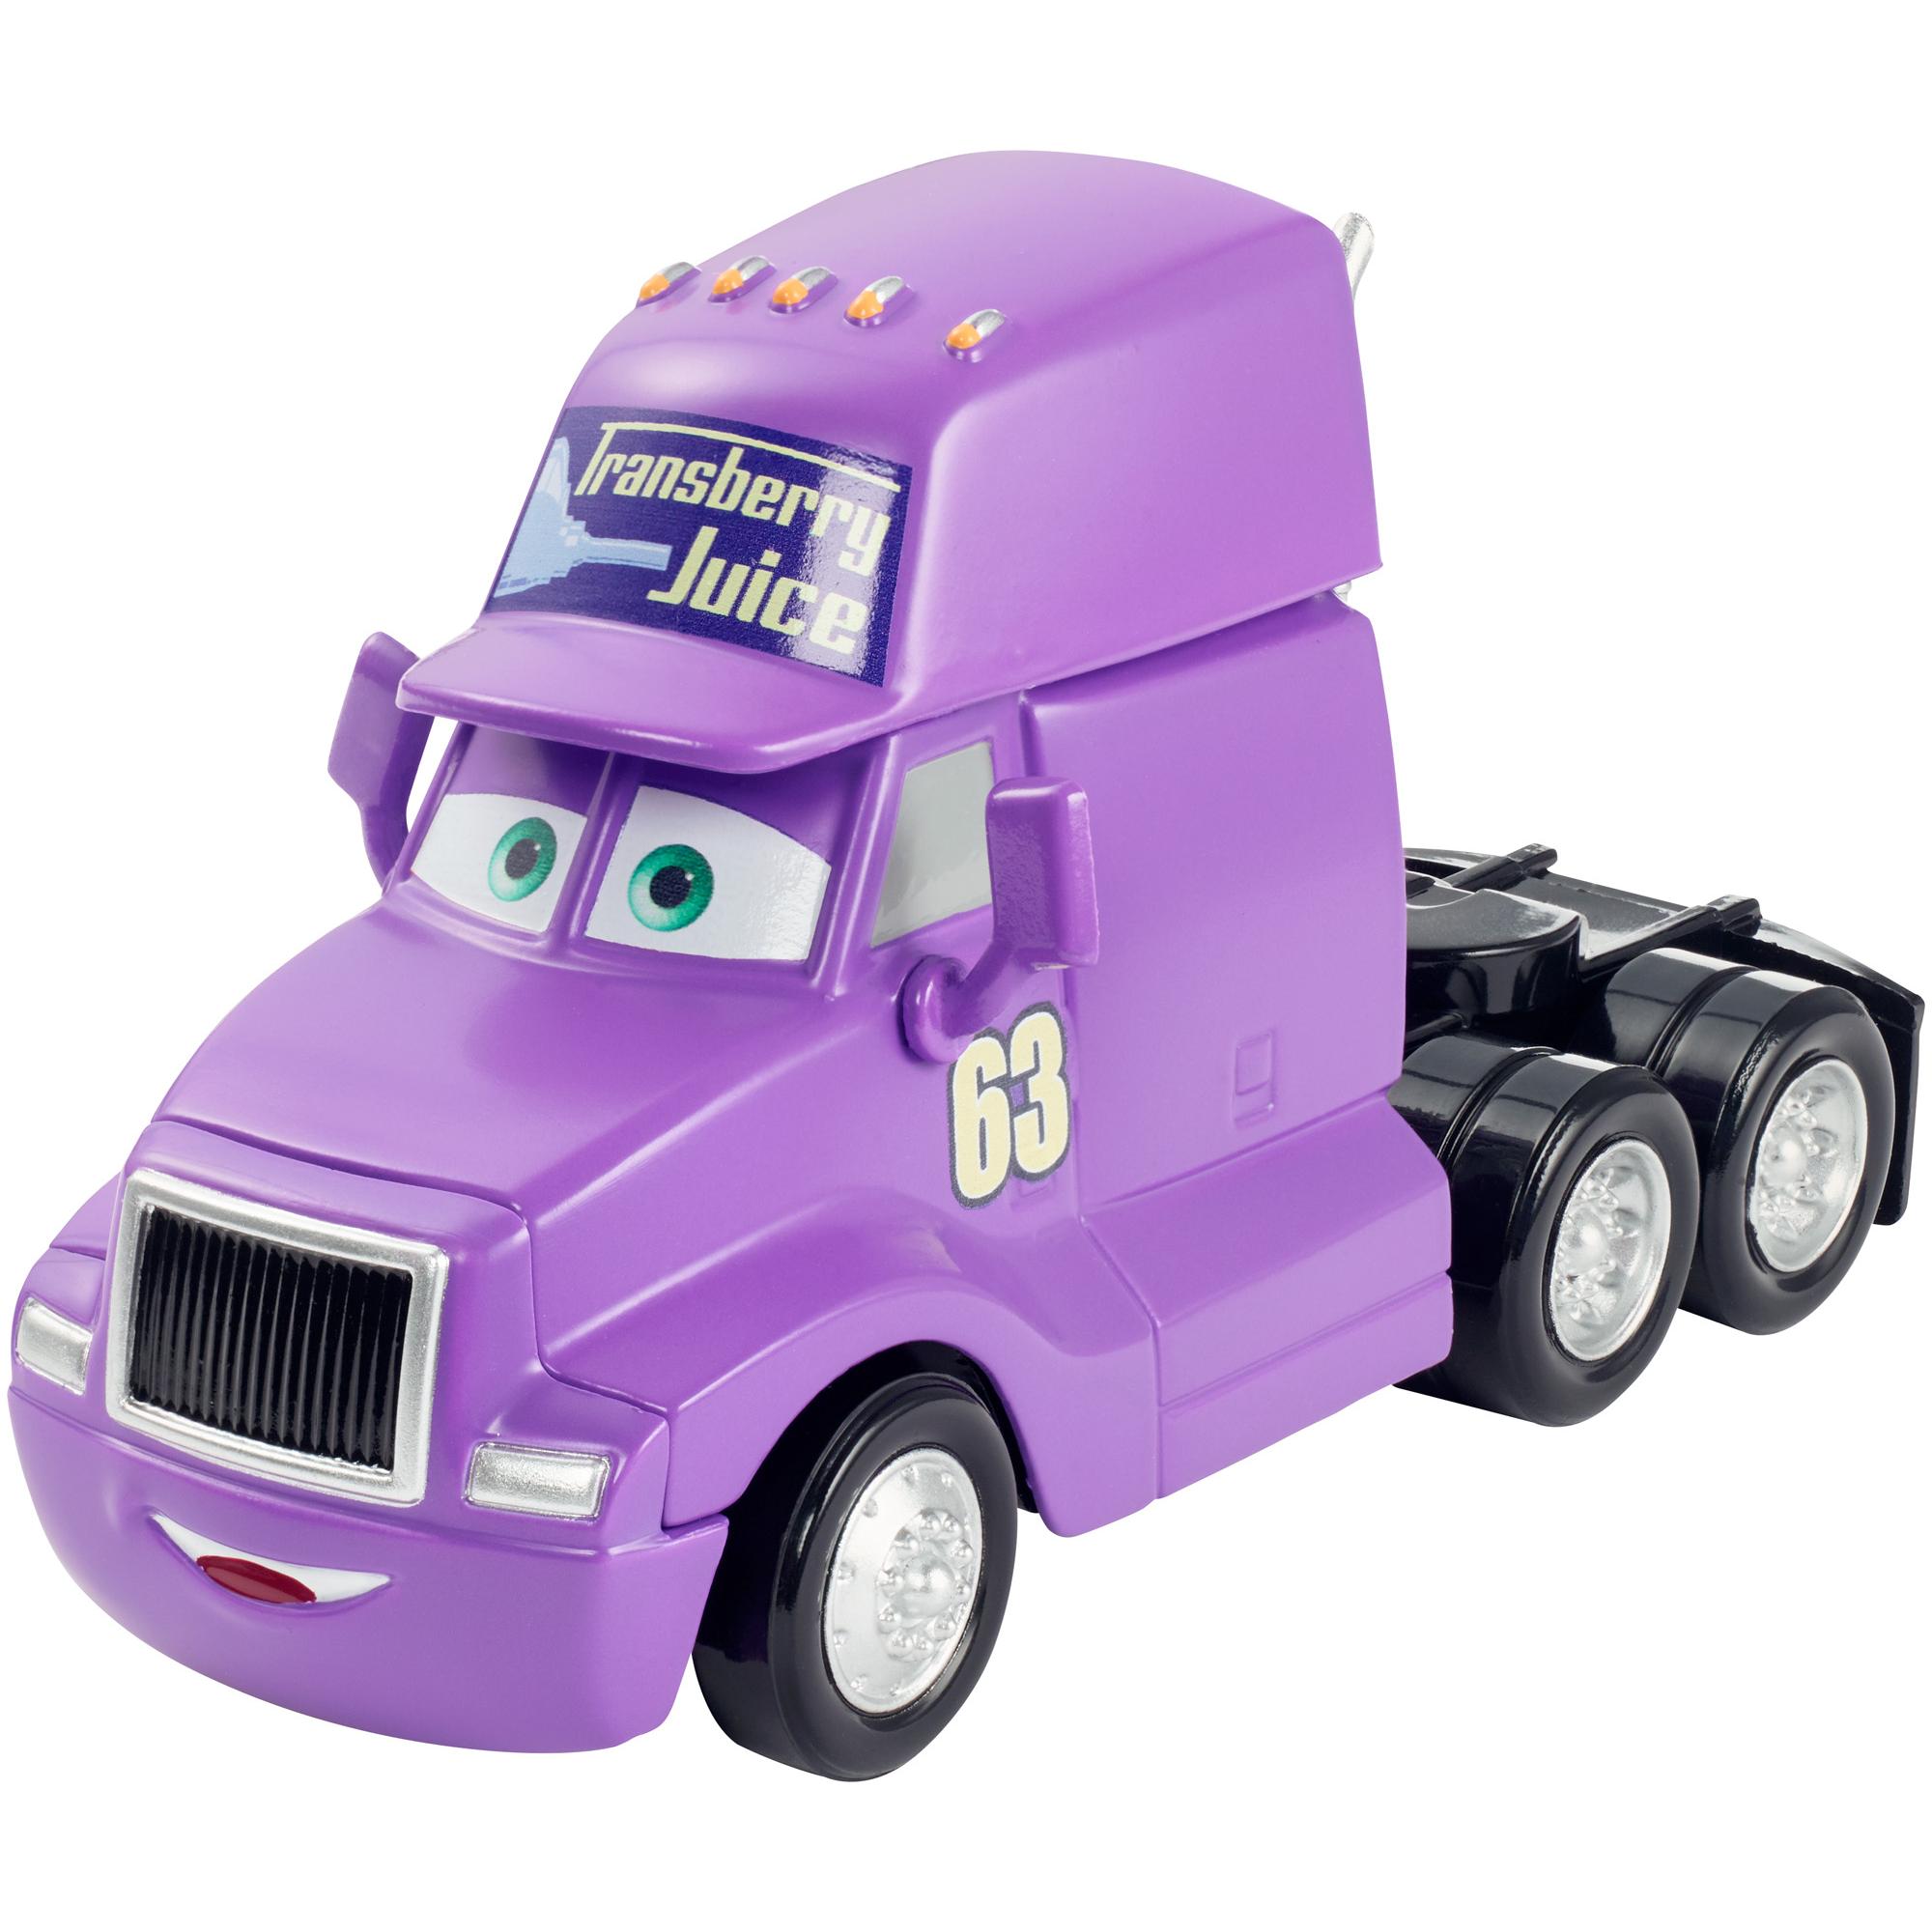 Disney/Pixar Cars Transberry Juice Cab Deluxe Die-Cast Vehicle - image 1 of 8